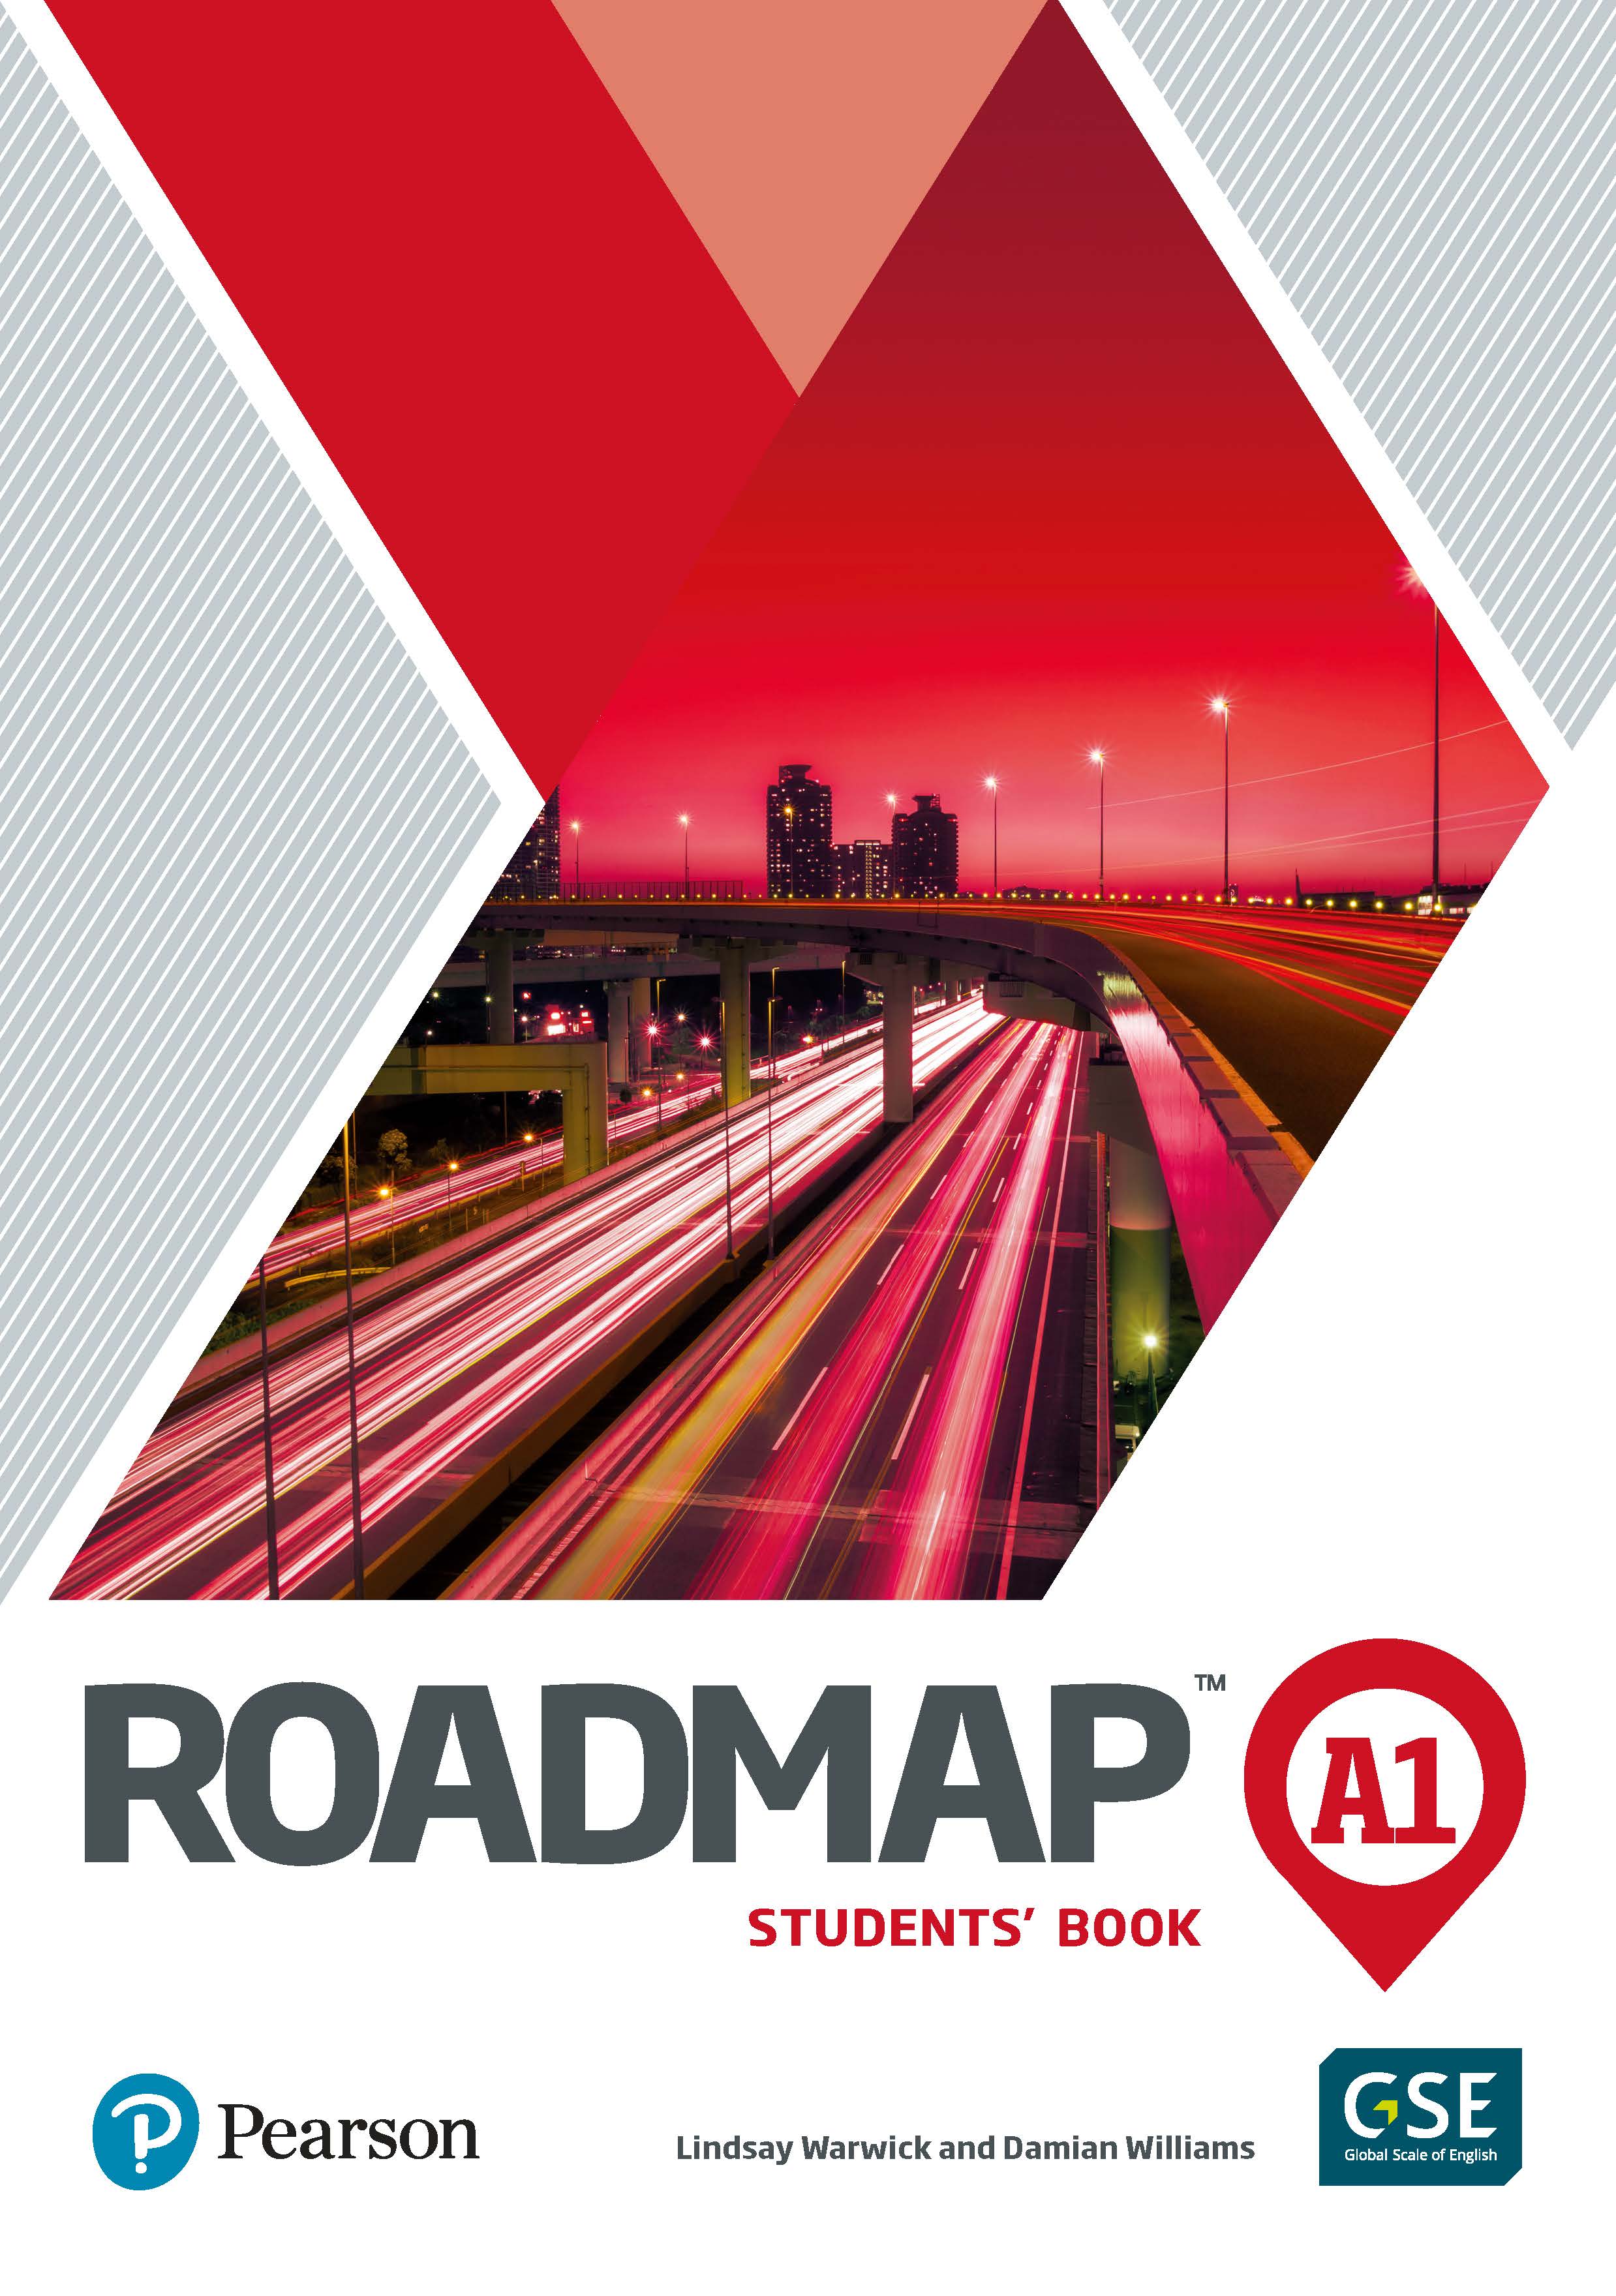 Roadmap cover image